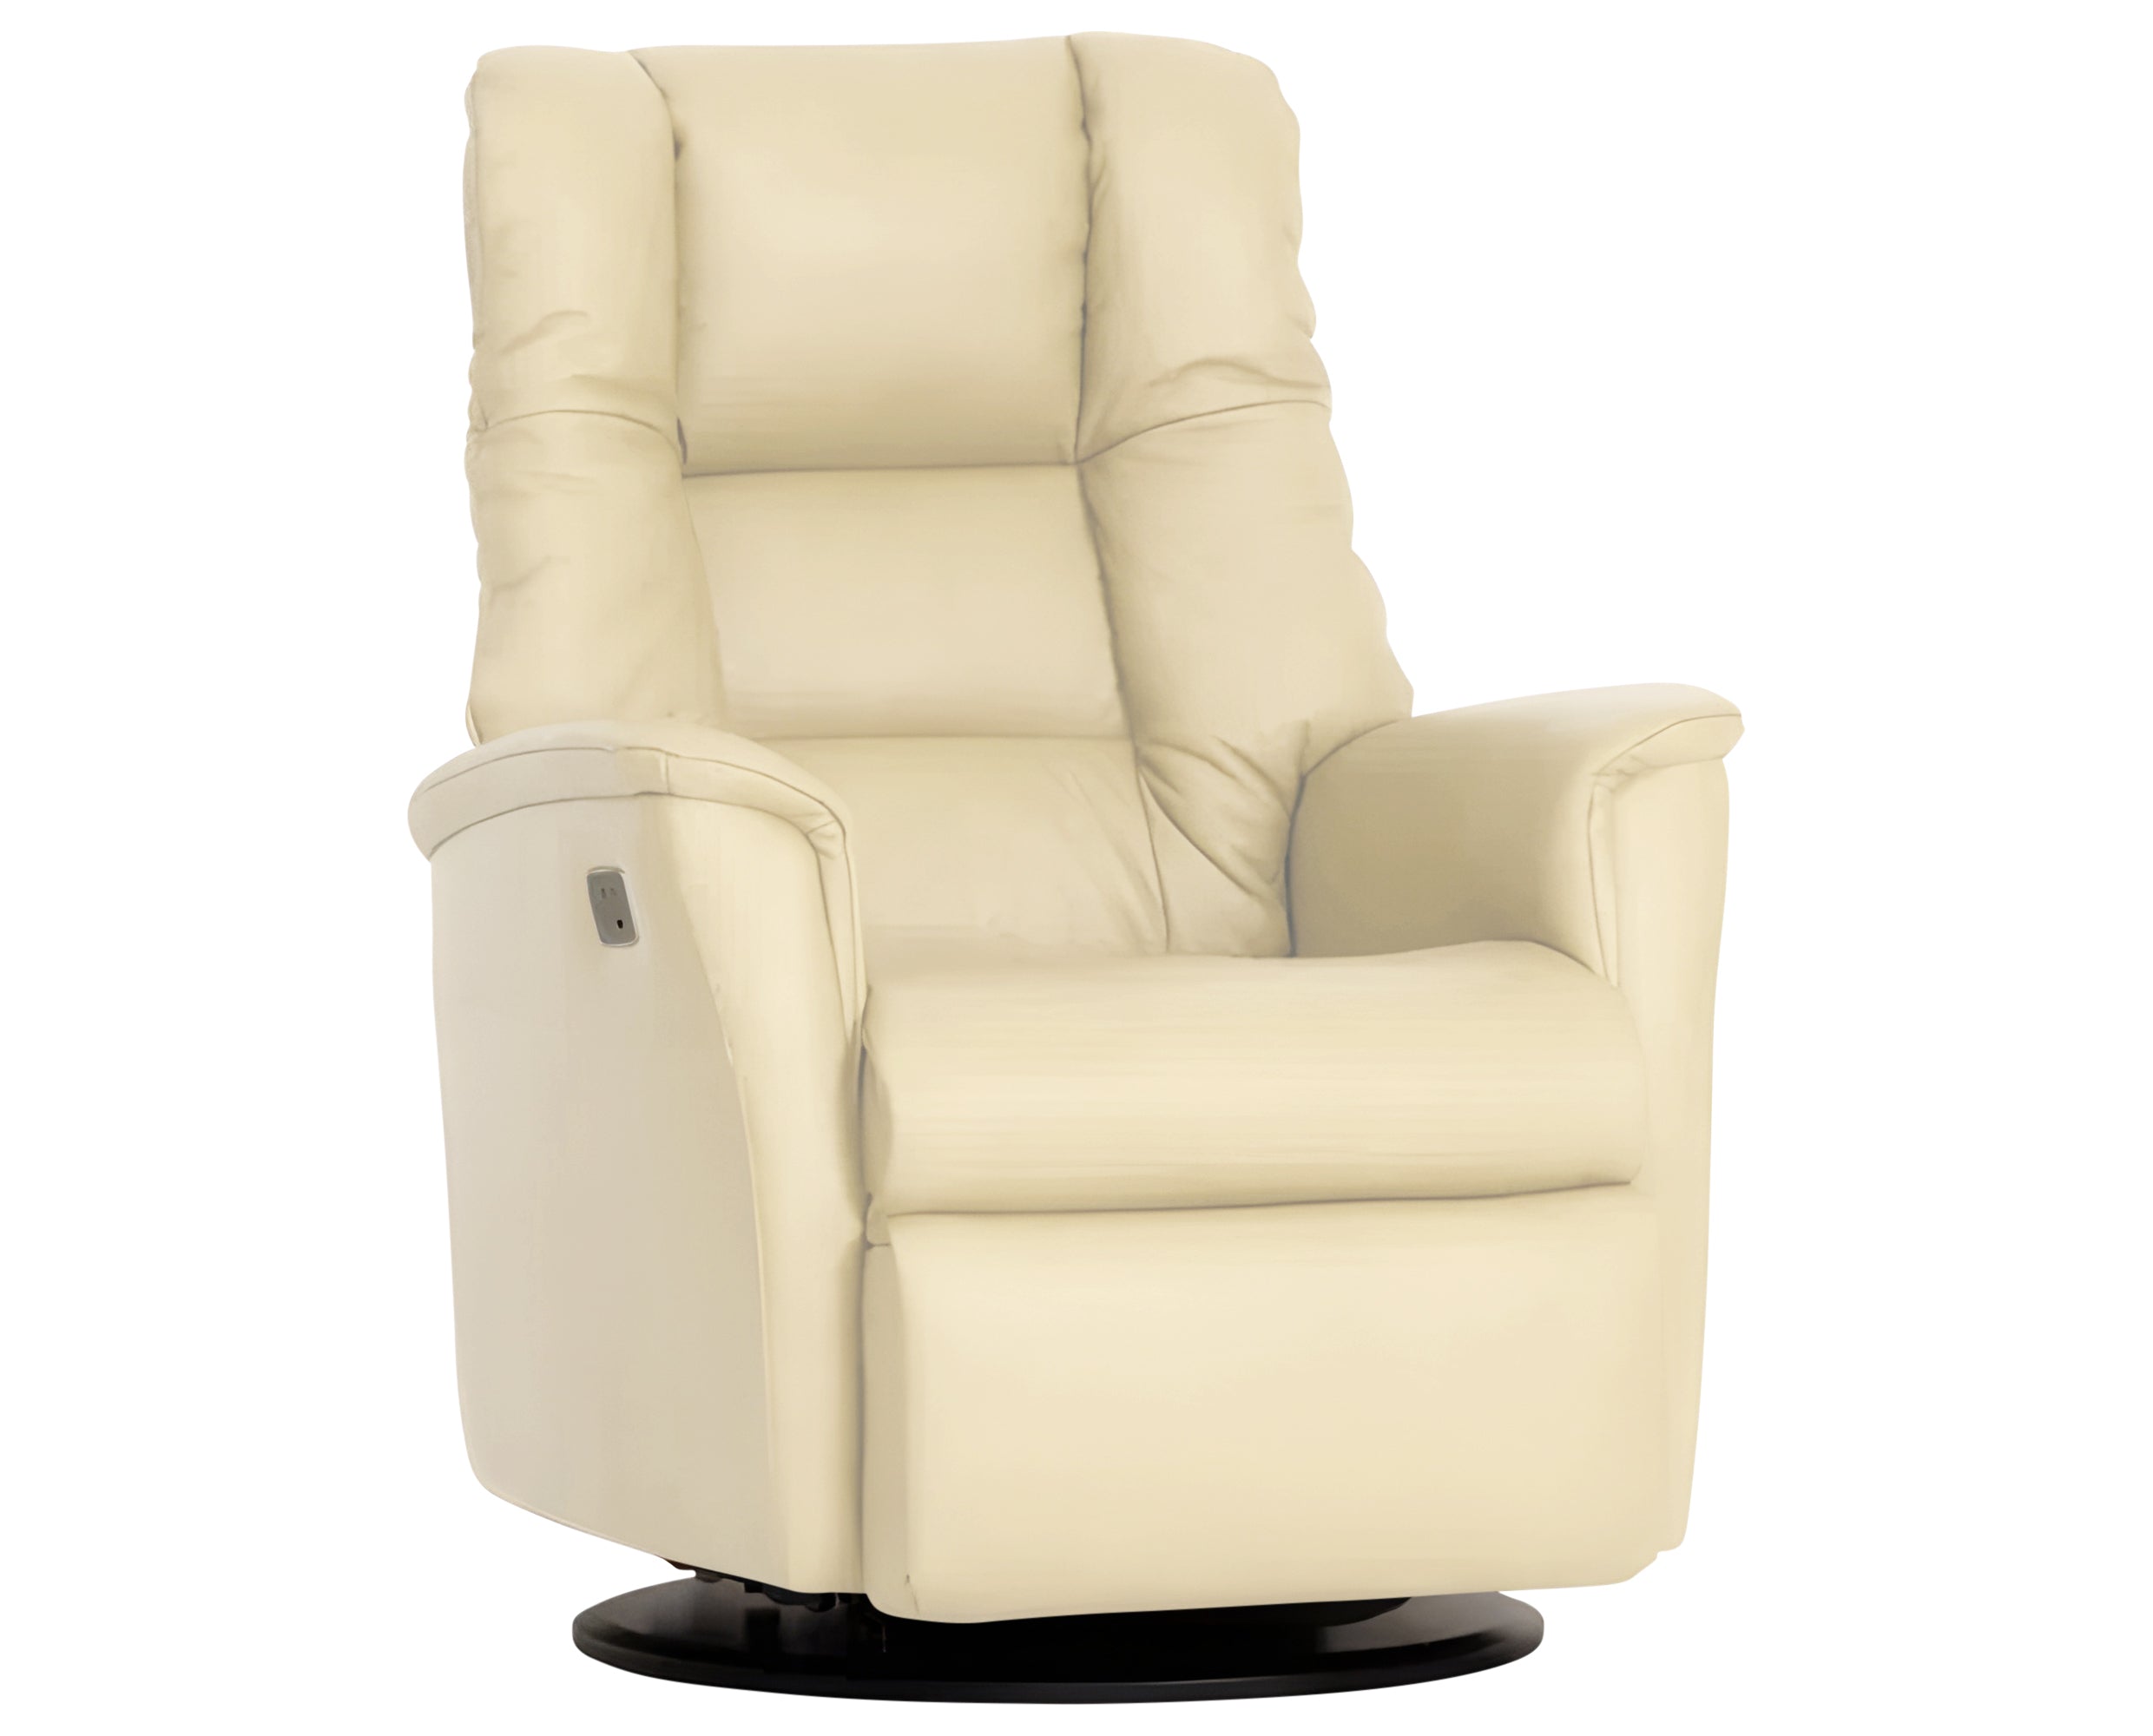 Trend Leather Cream M | Norwegian Comfort Victor Recliner - Promo | Valley Ridge Furniture